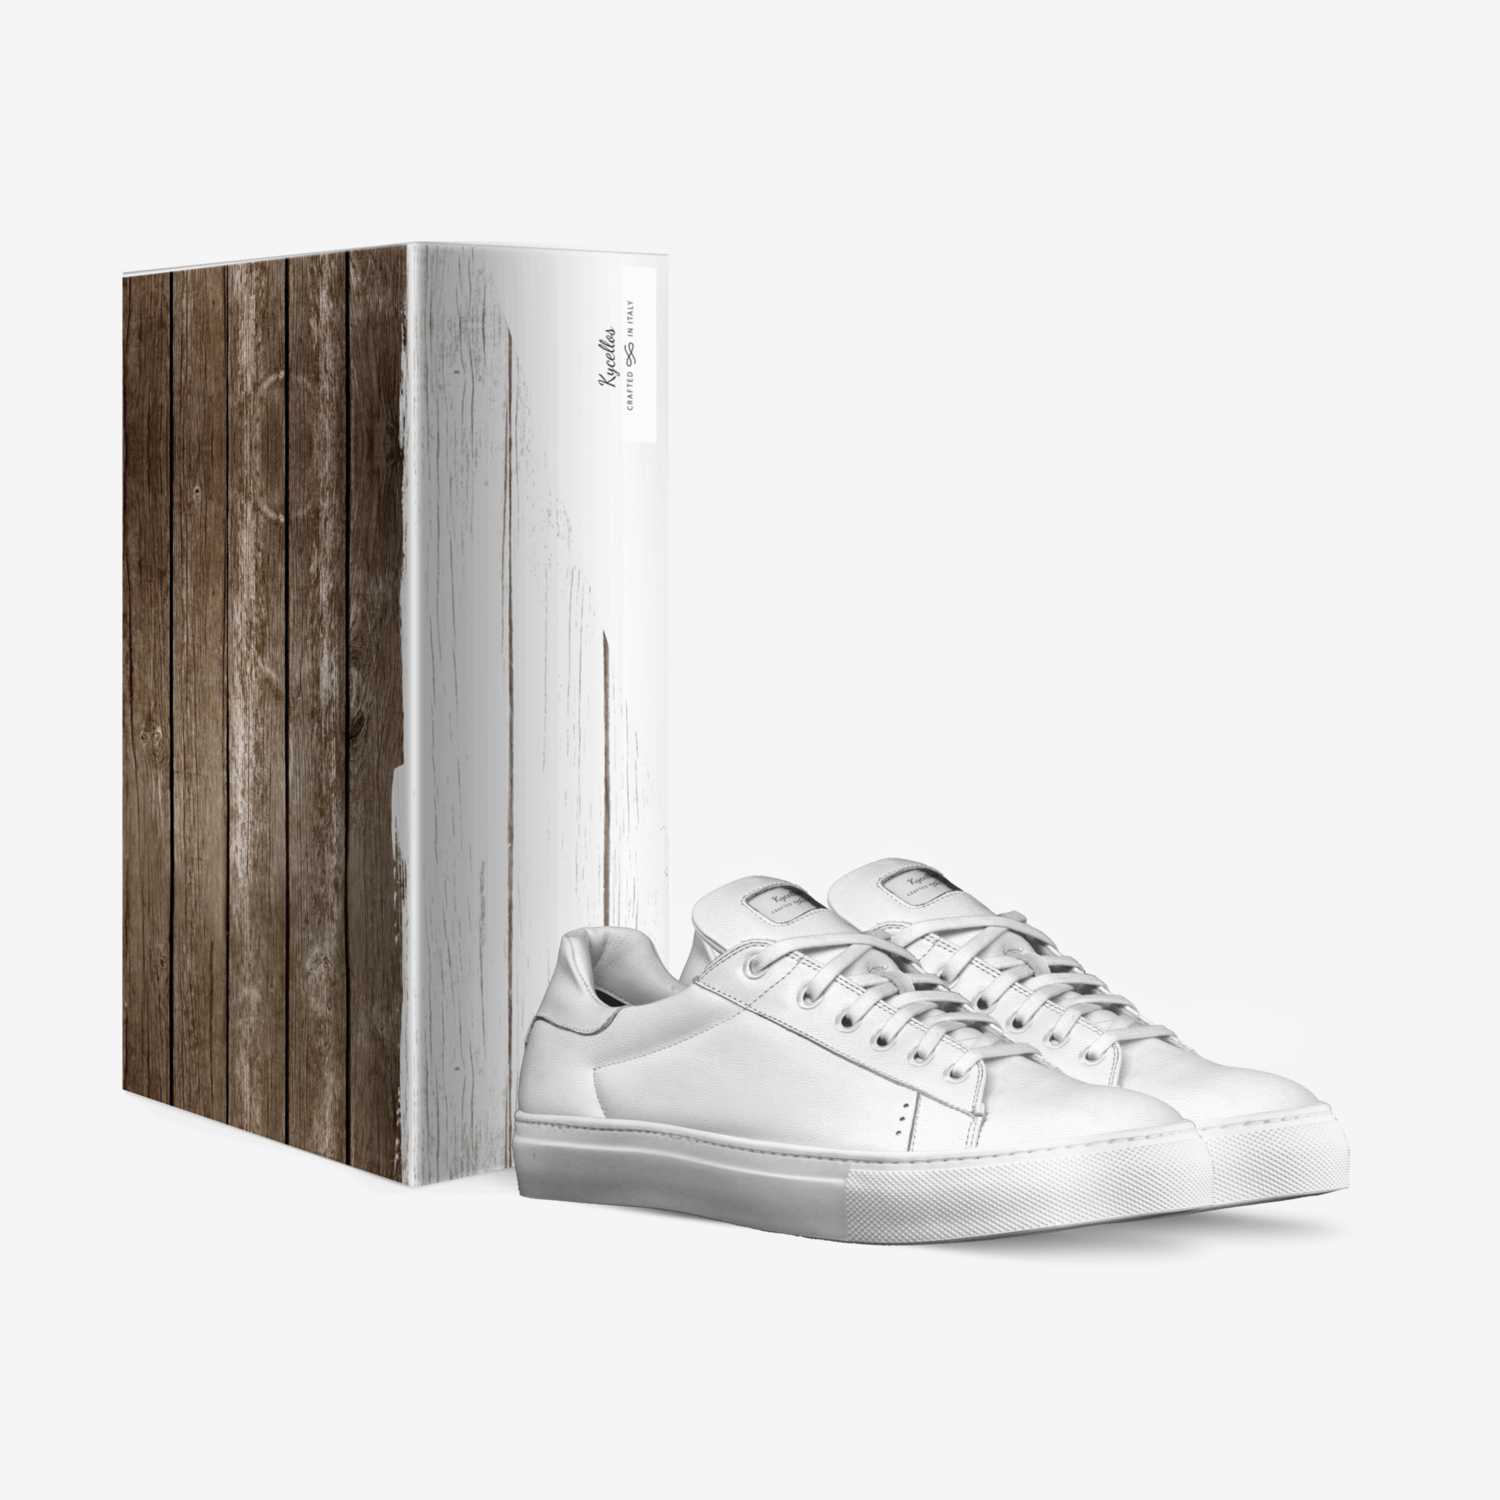 Kycellos  custom made in Italy shoes by Kyran | Box view